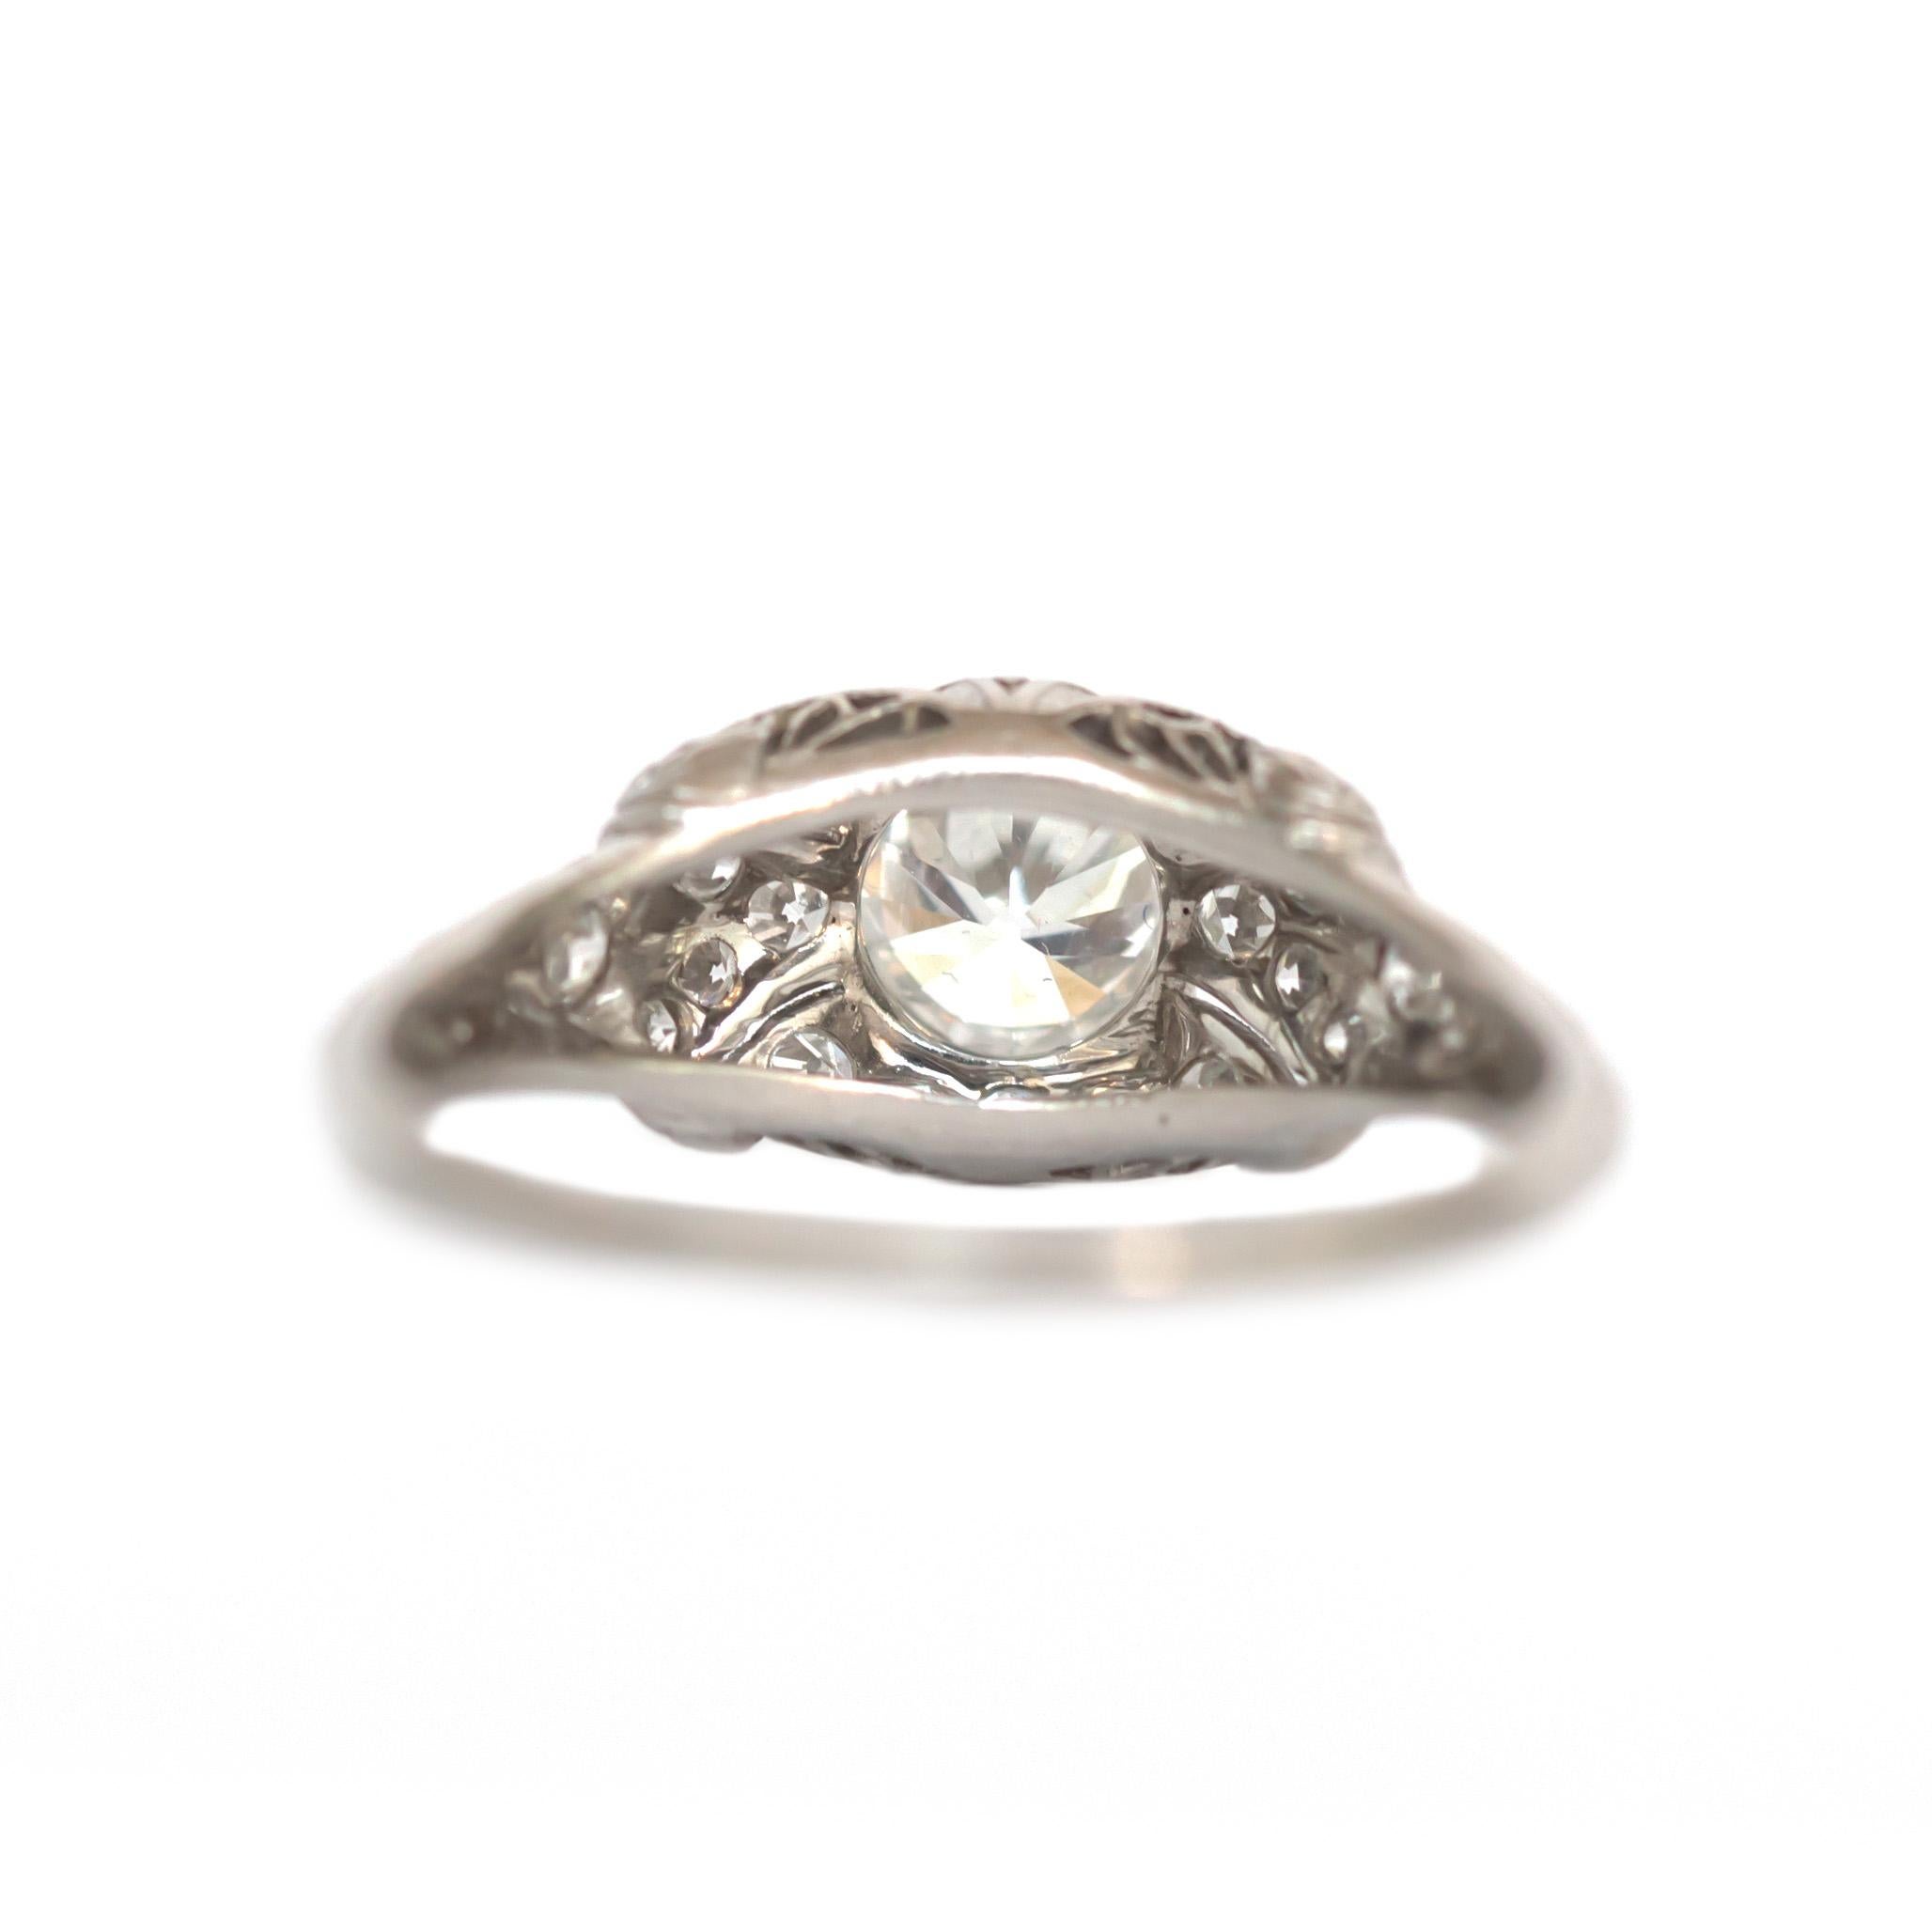 68 carat diamond ring